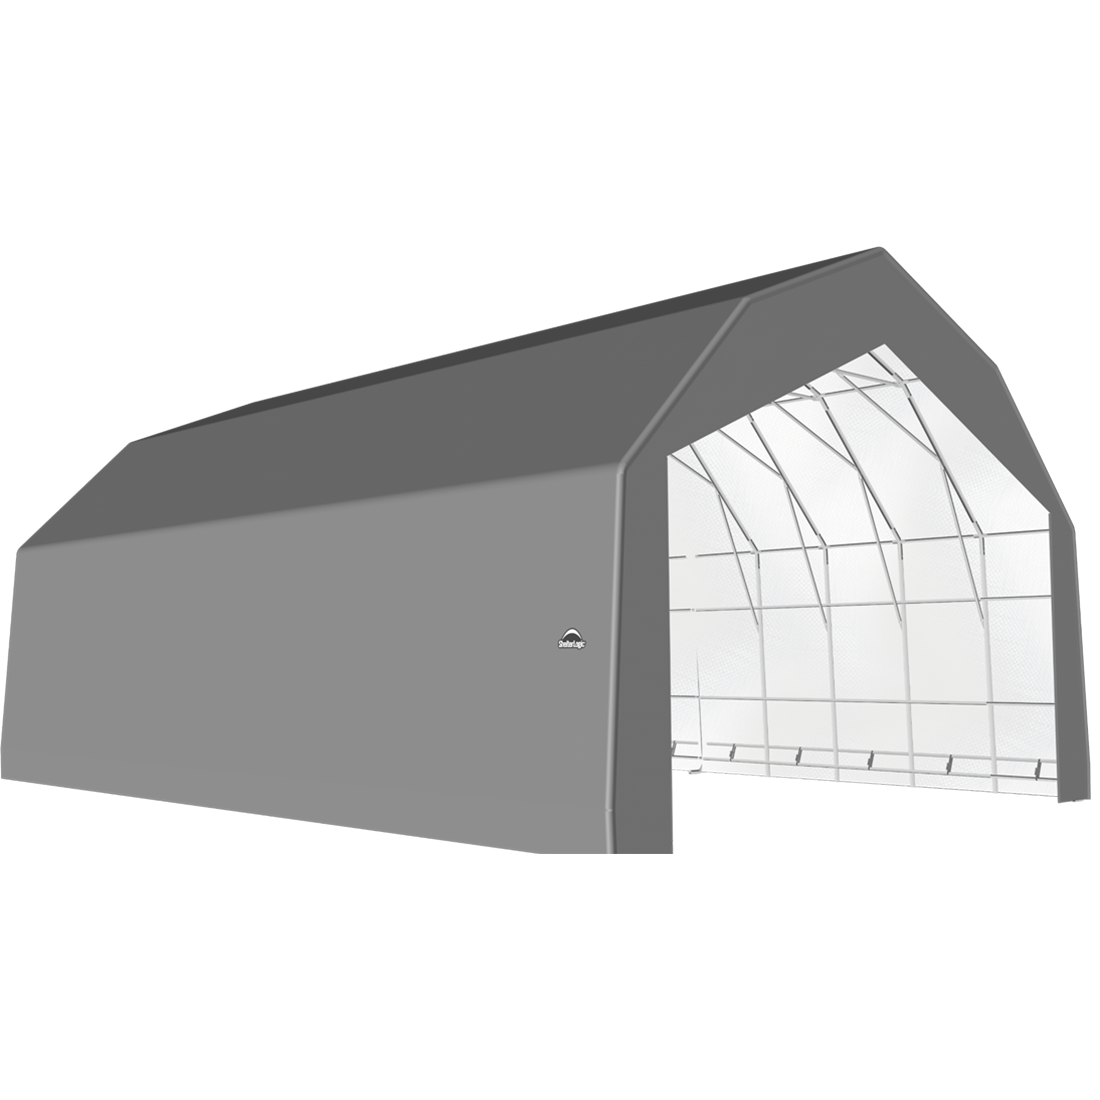 ShelterTech SP Series Barn Shelter, 30 ft. x 36 ft. x 21 ft. Heavy Duty PVC 14.5 oz. Gray